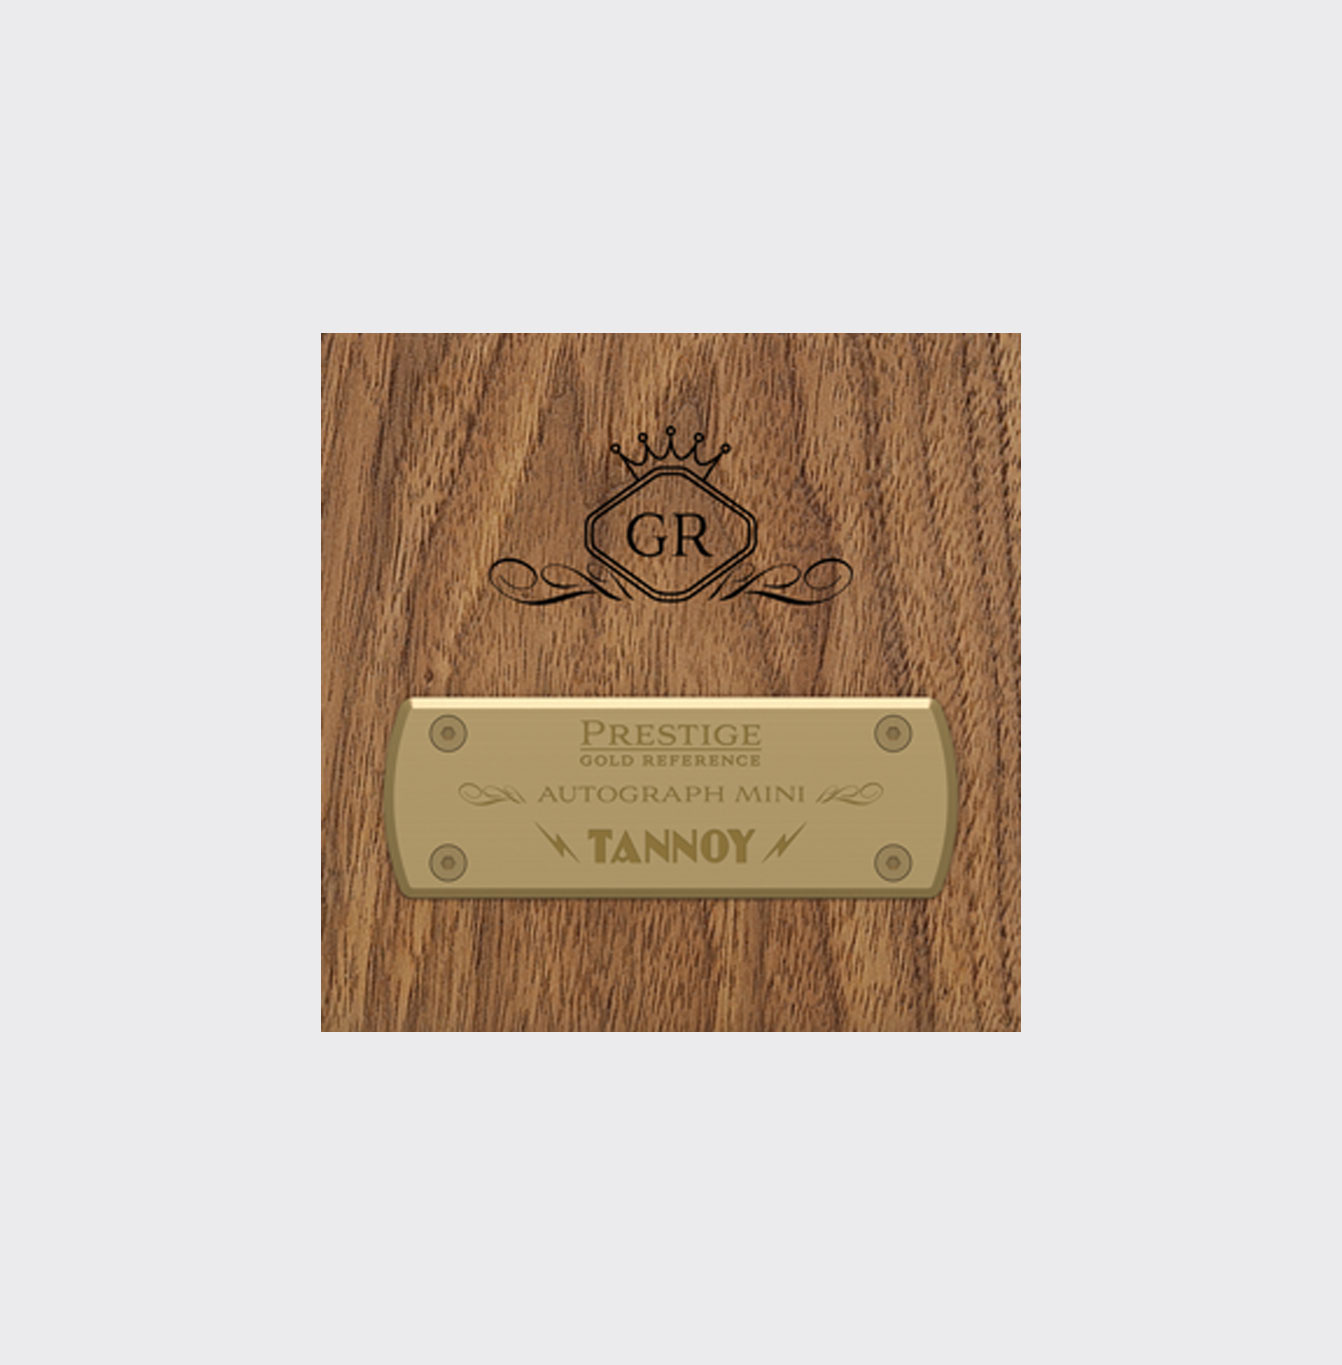 Tannoy Autograph Mini-OW